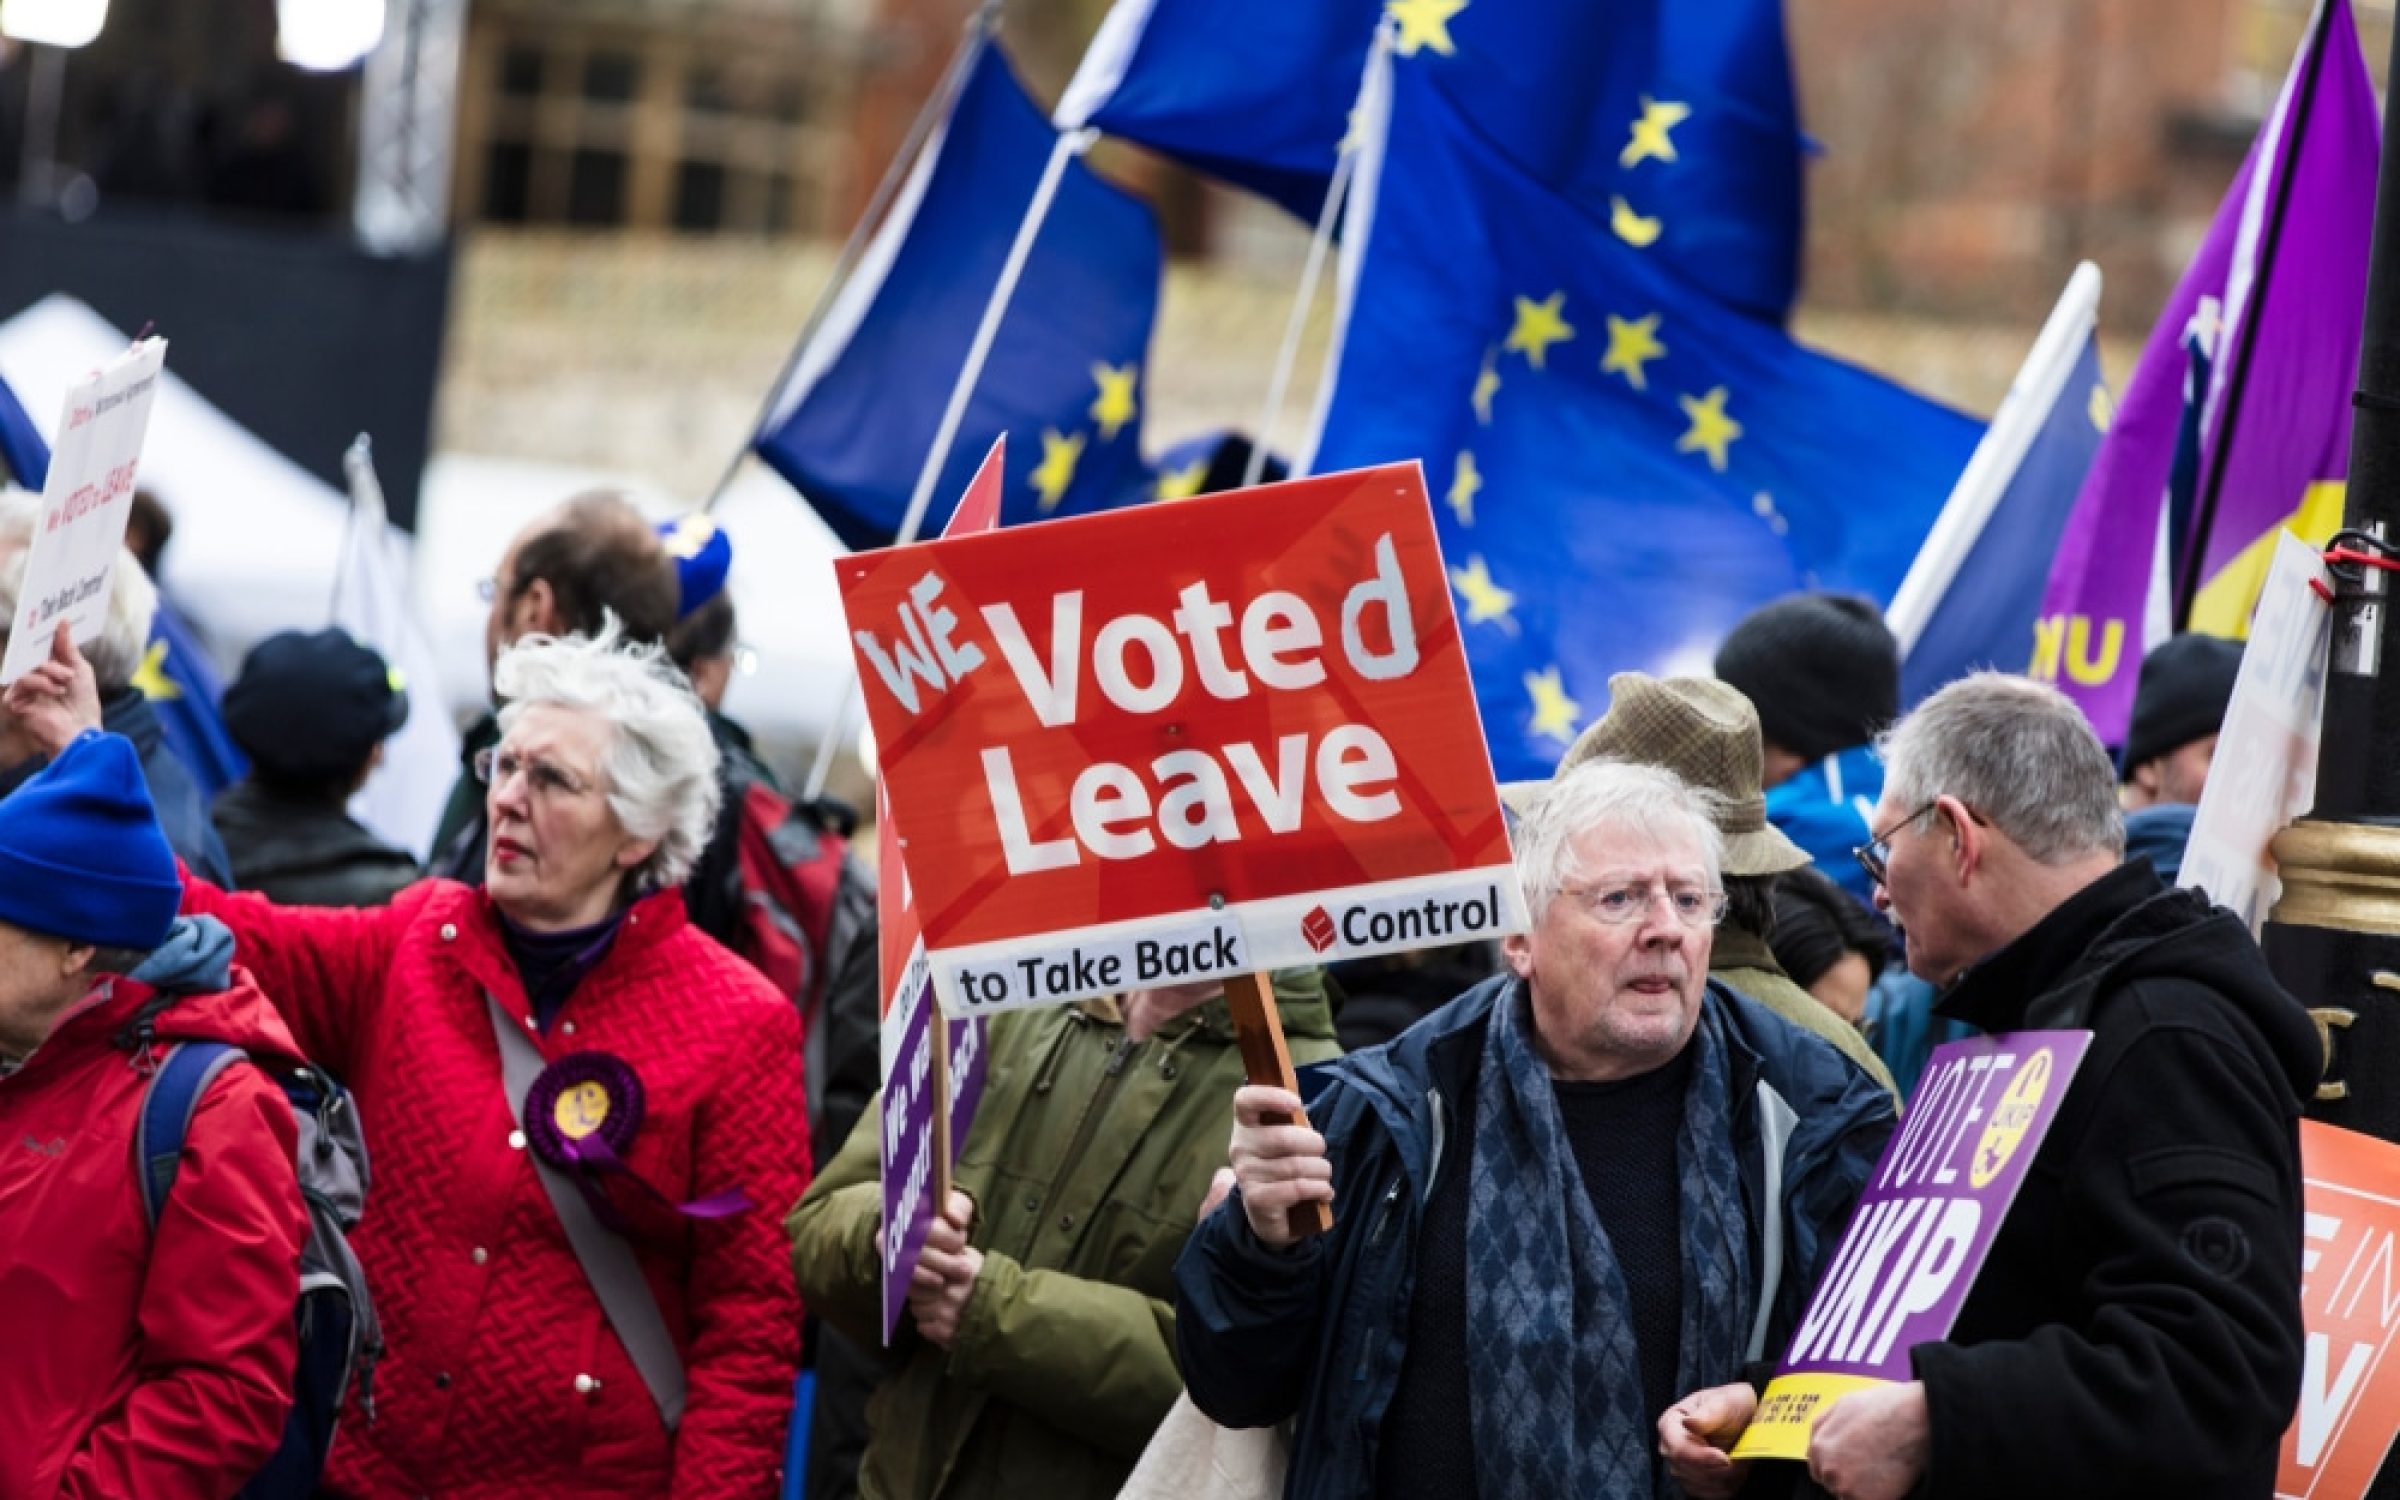 Take back control, anti-immigration, anti-EU, Brexit protest